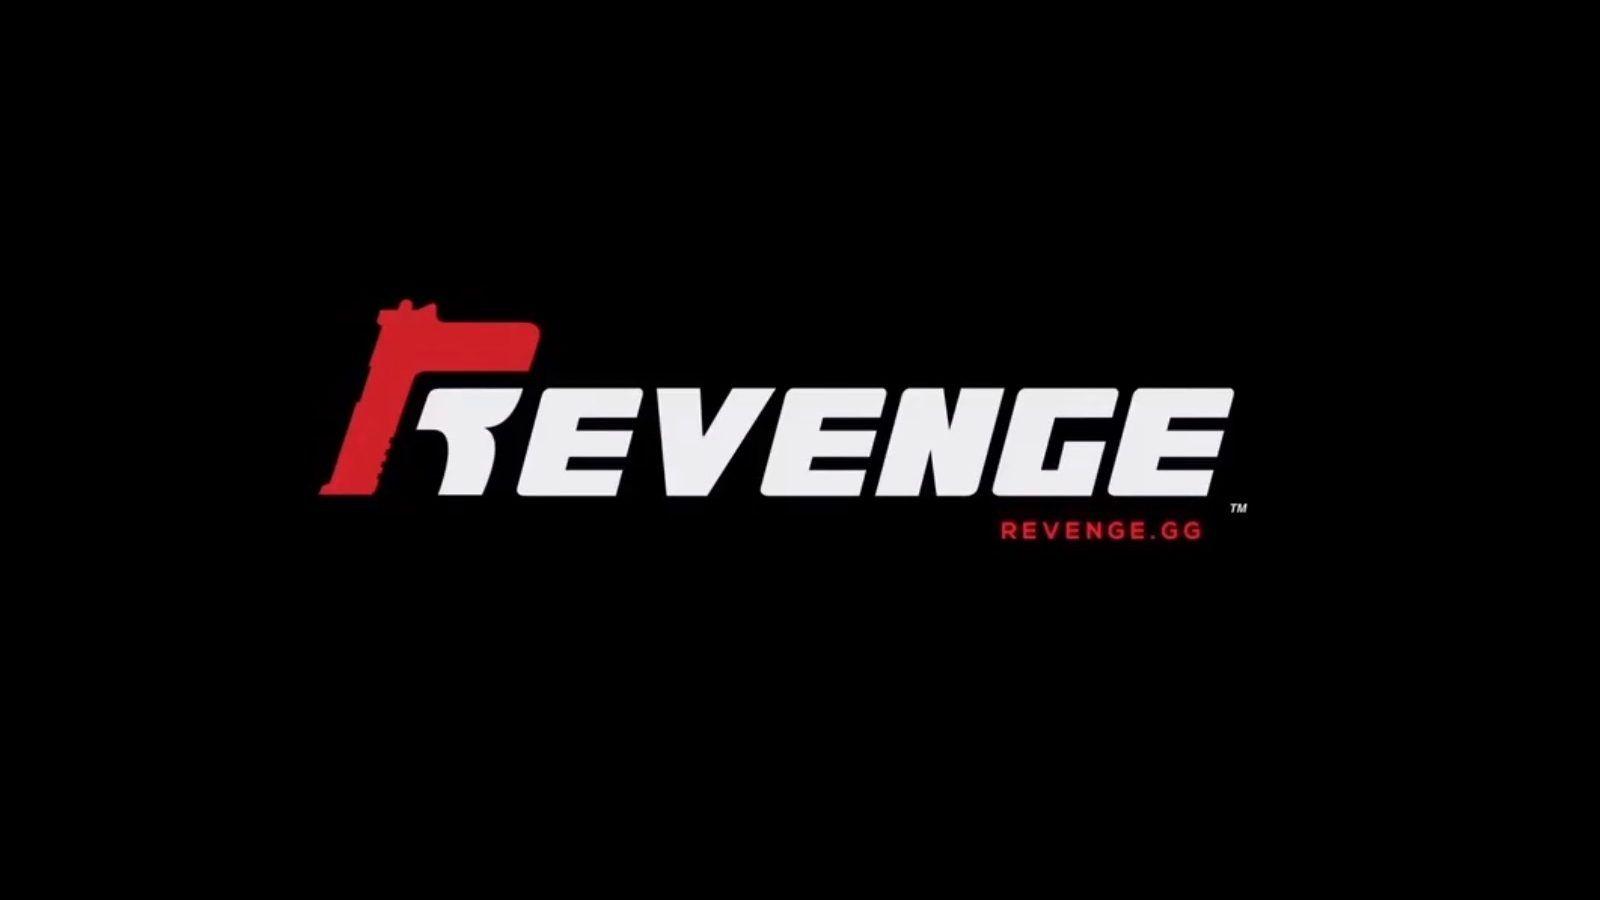 Team Revenge Logo - Team Revenge are returning to competitive Call of Duty | Dexerto.com ...